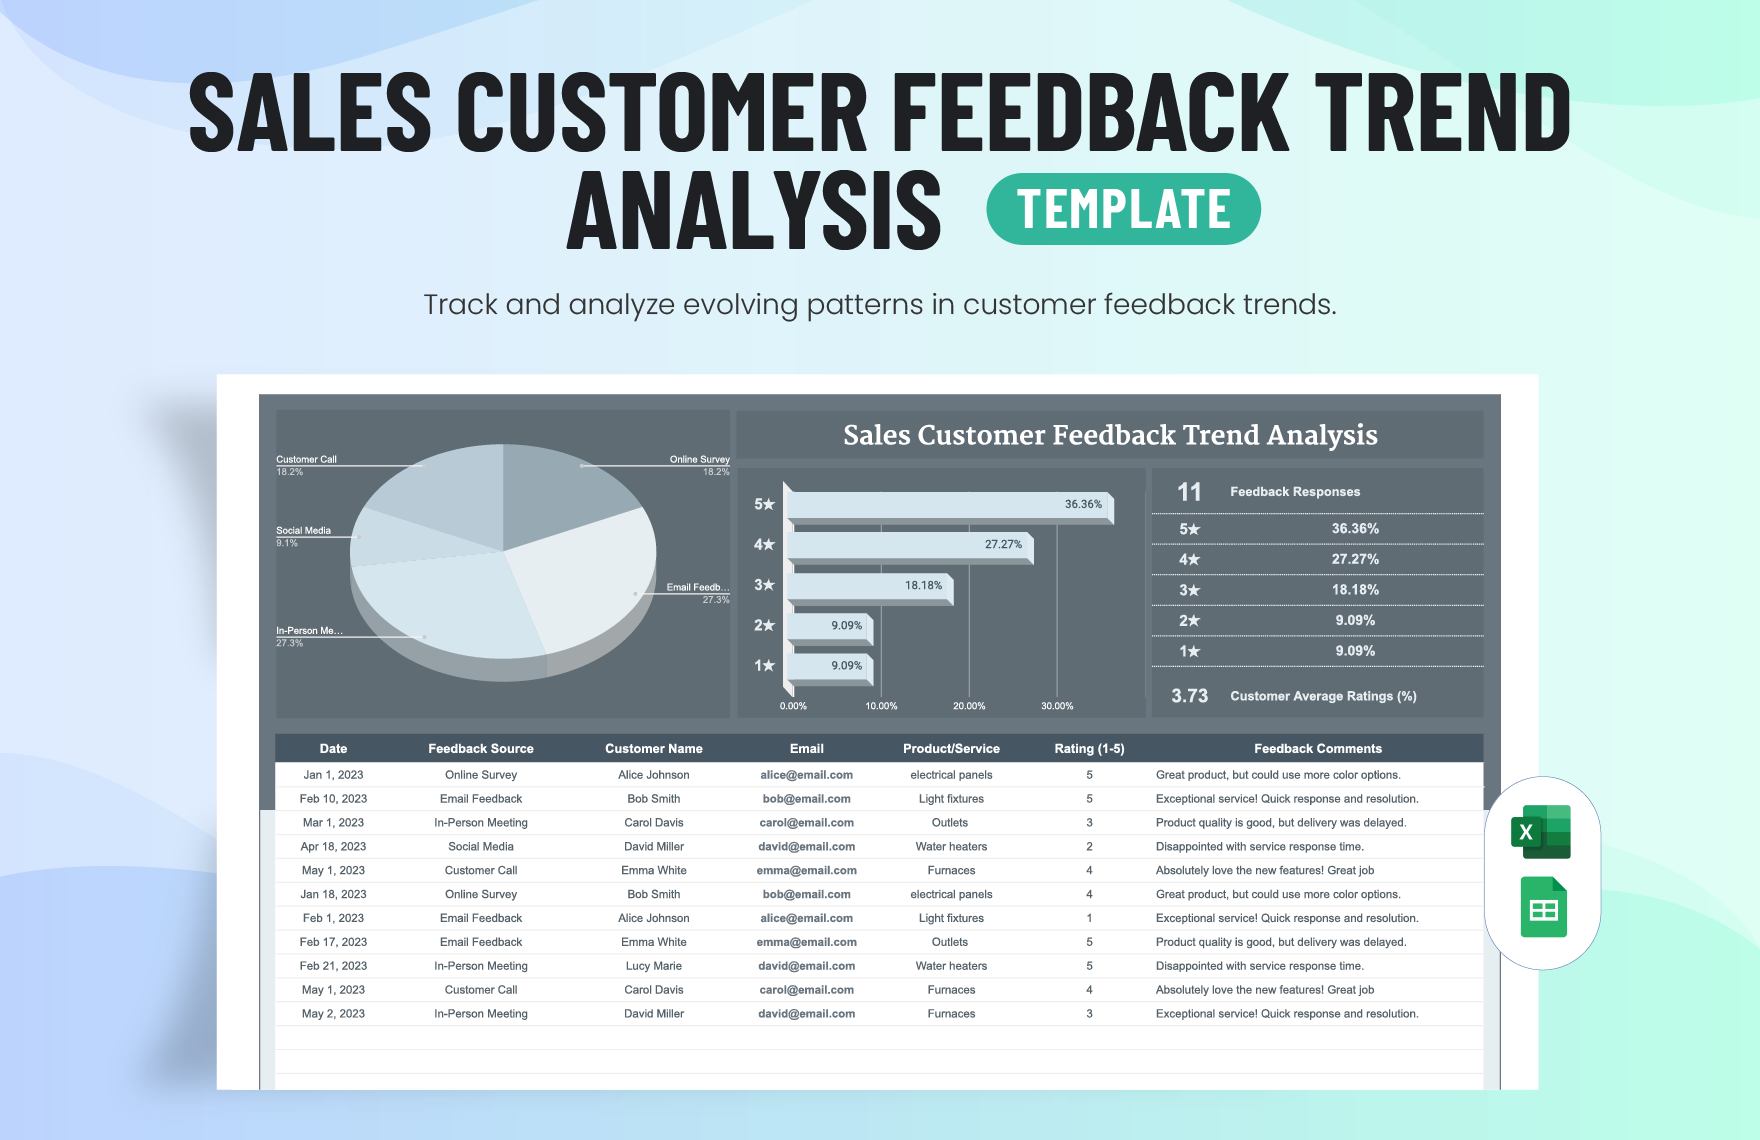 Sales Customer Feedback Trend Analysis Template